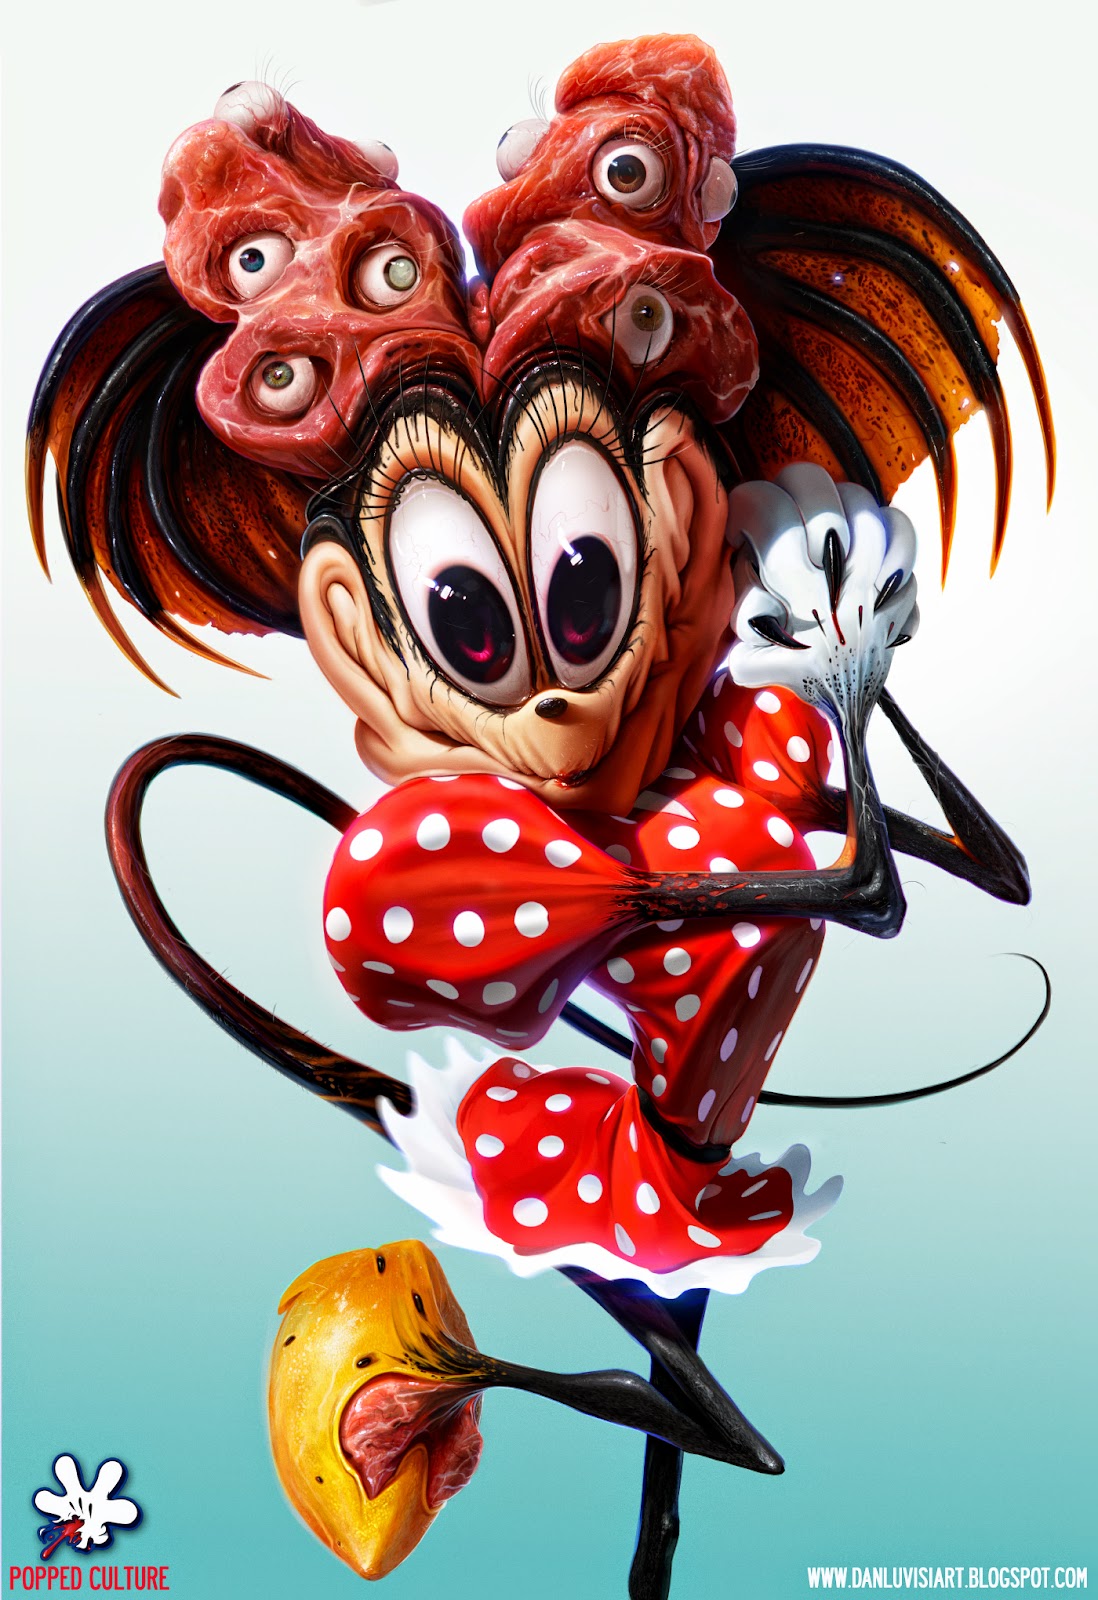 Dan Luvisi - Minnie Mouse